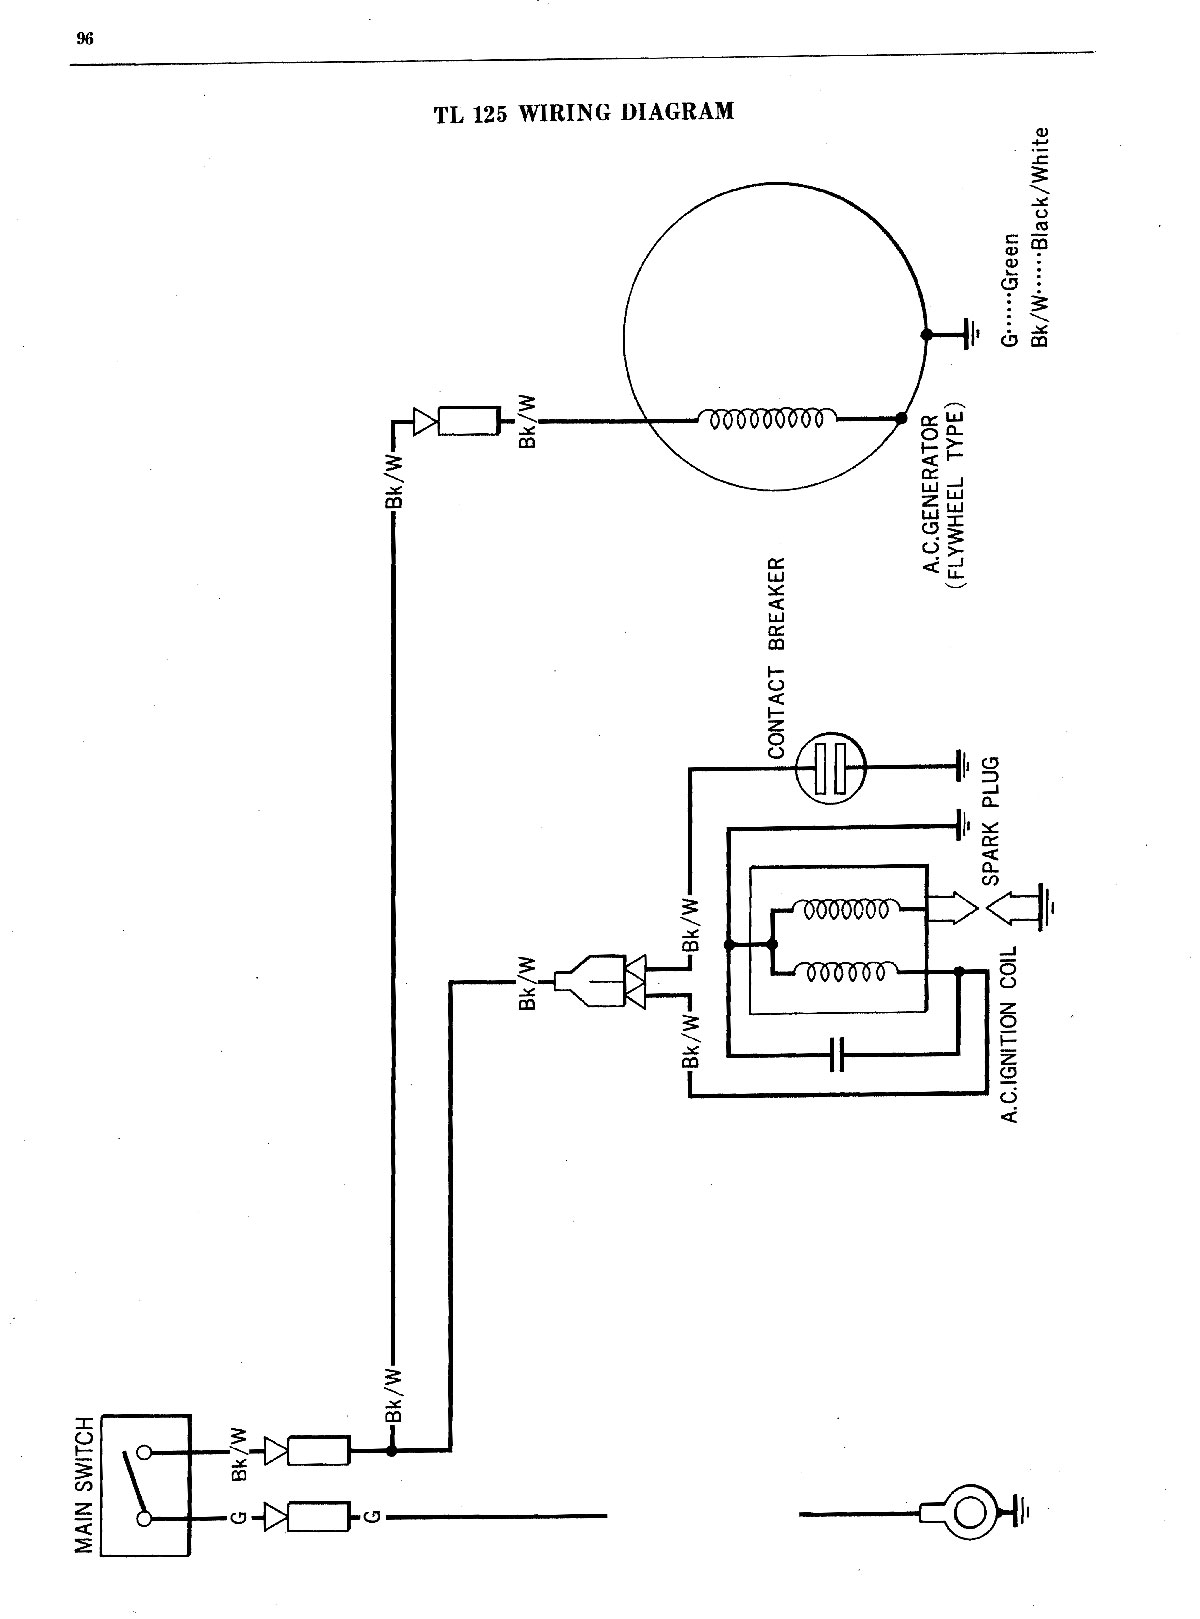 Honda cr125 wiring diagram #1